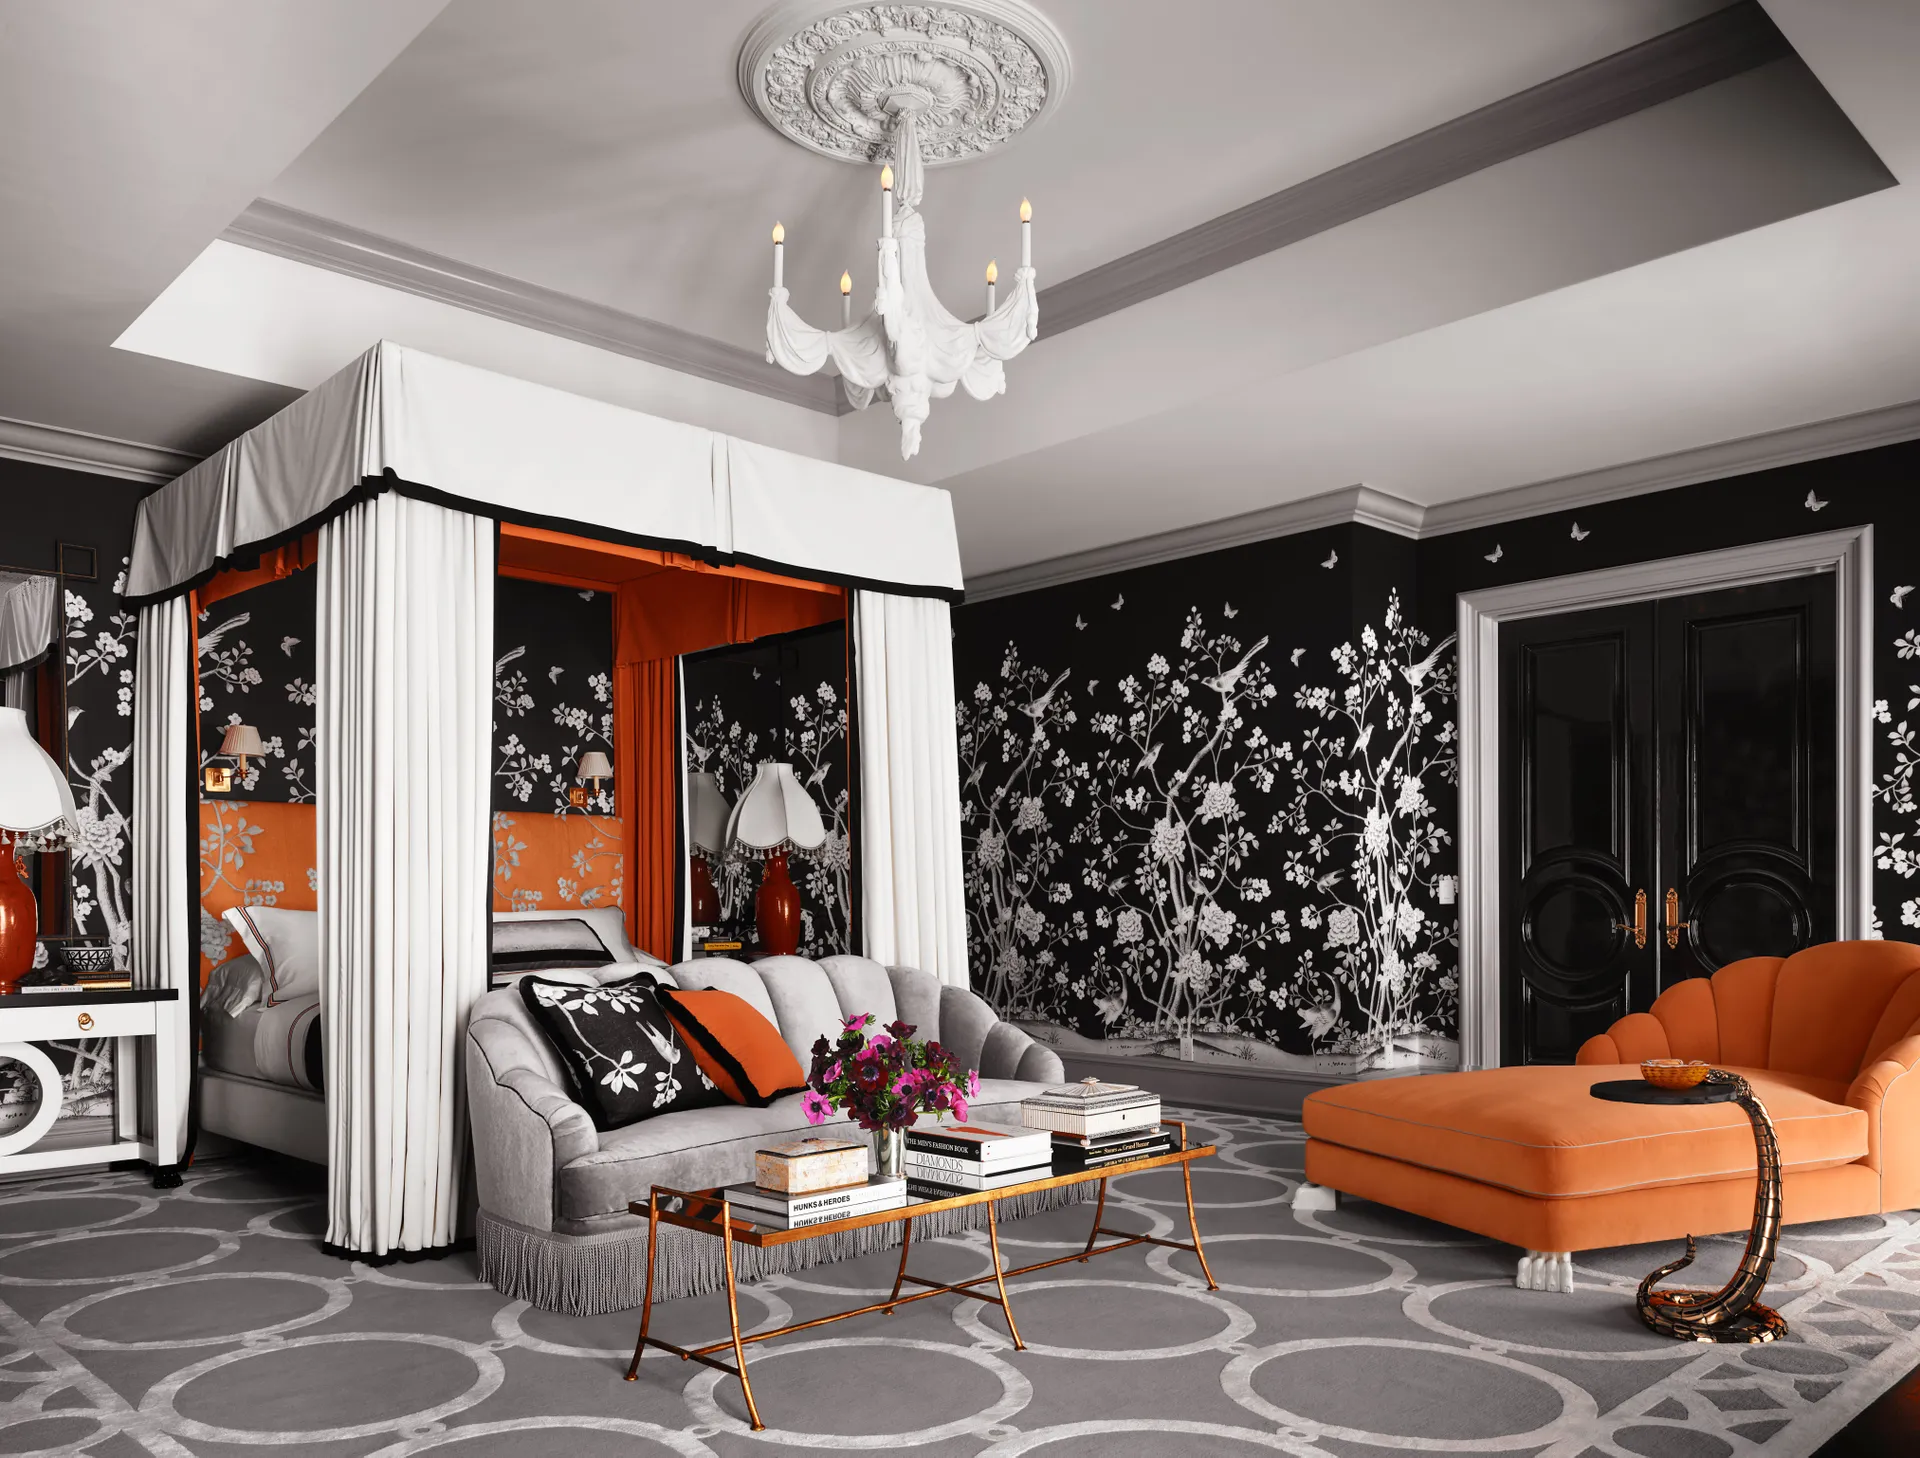 RuPauls master bedroom by Martyn Lawrence Bullard